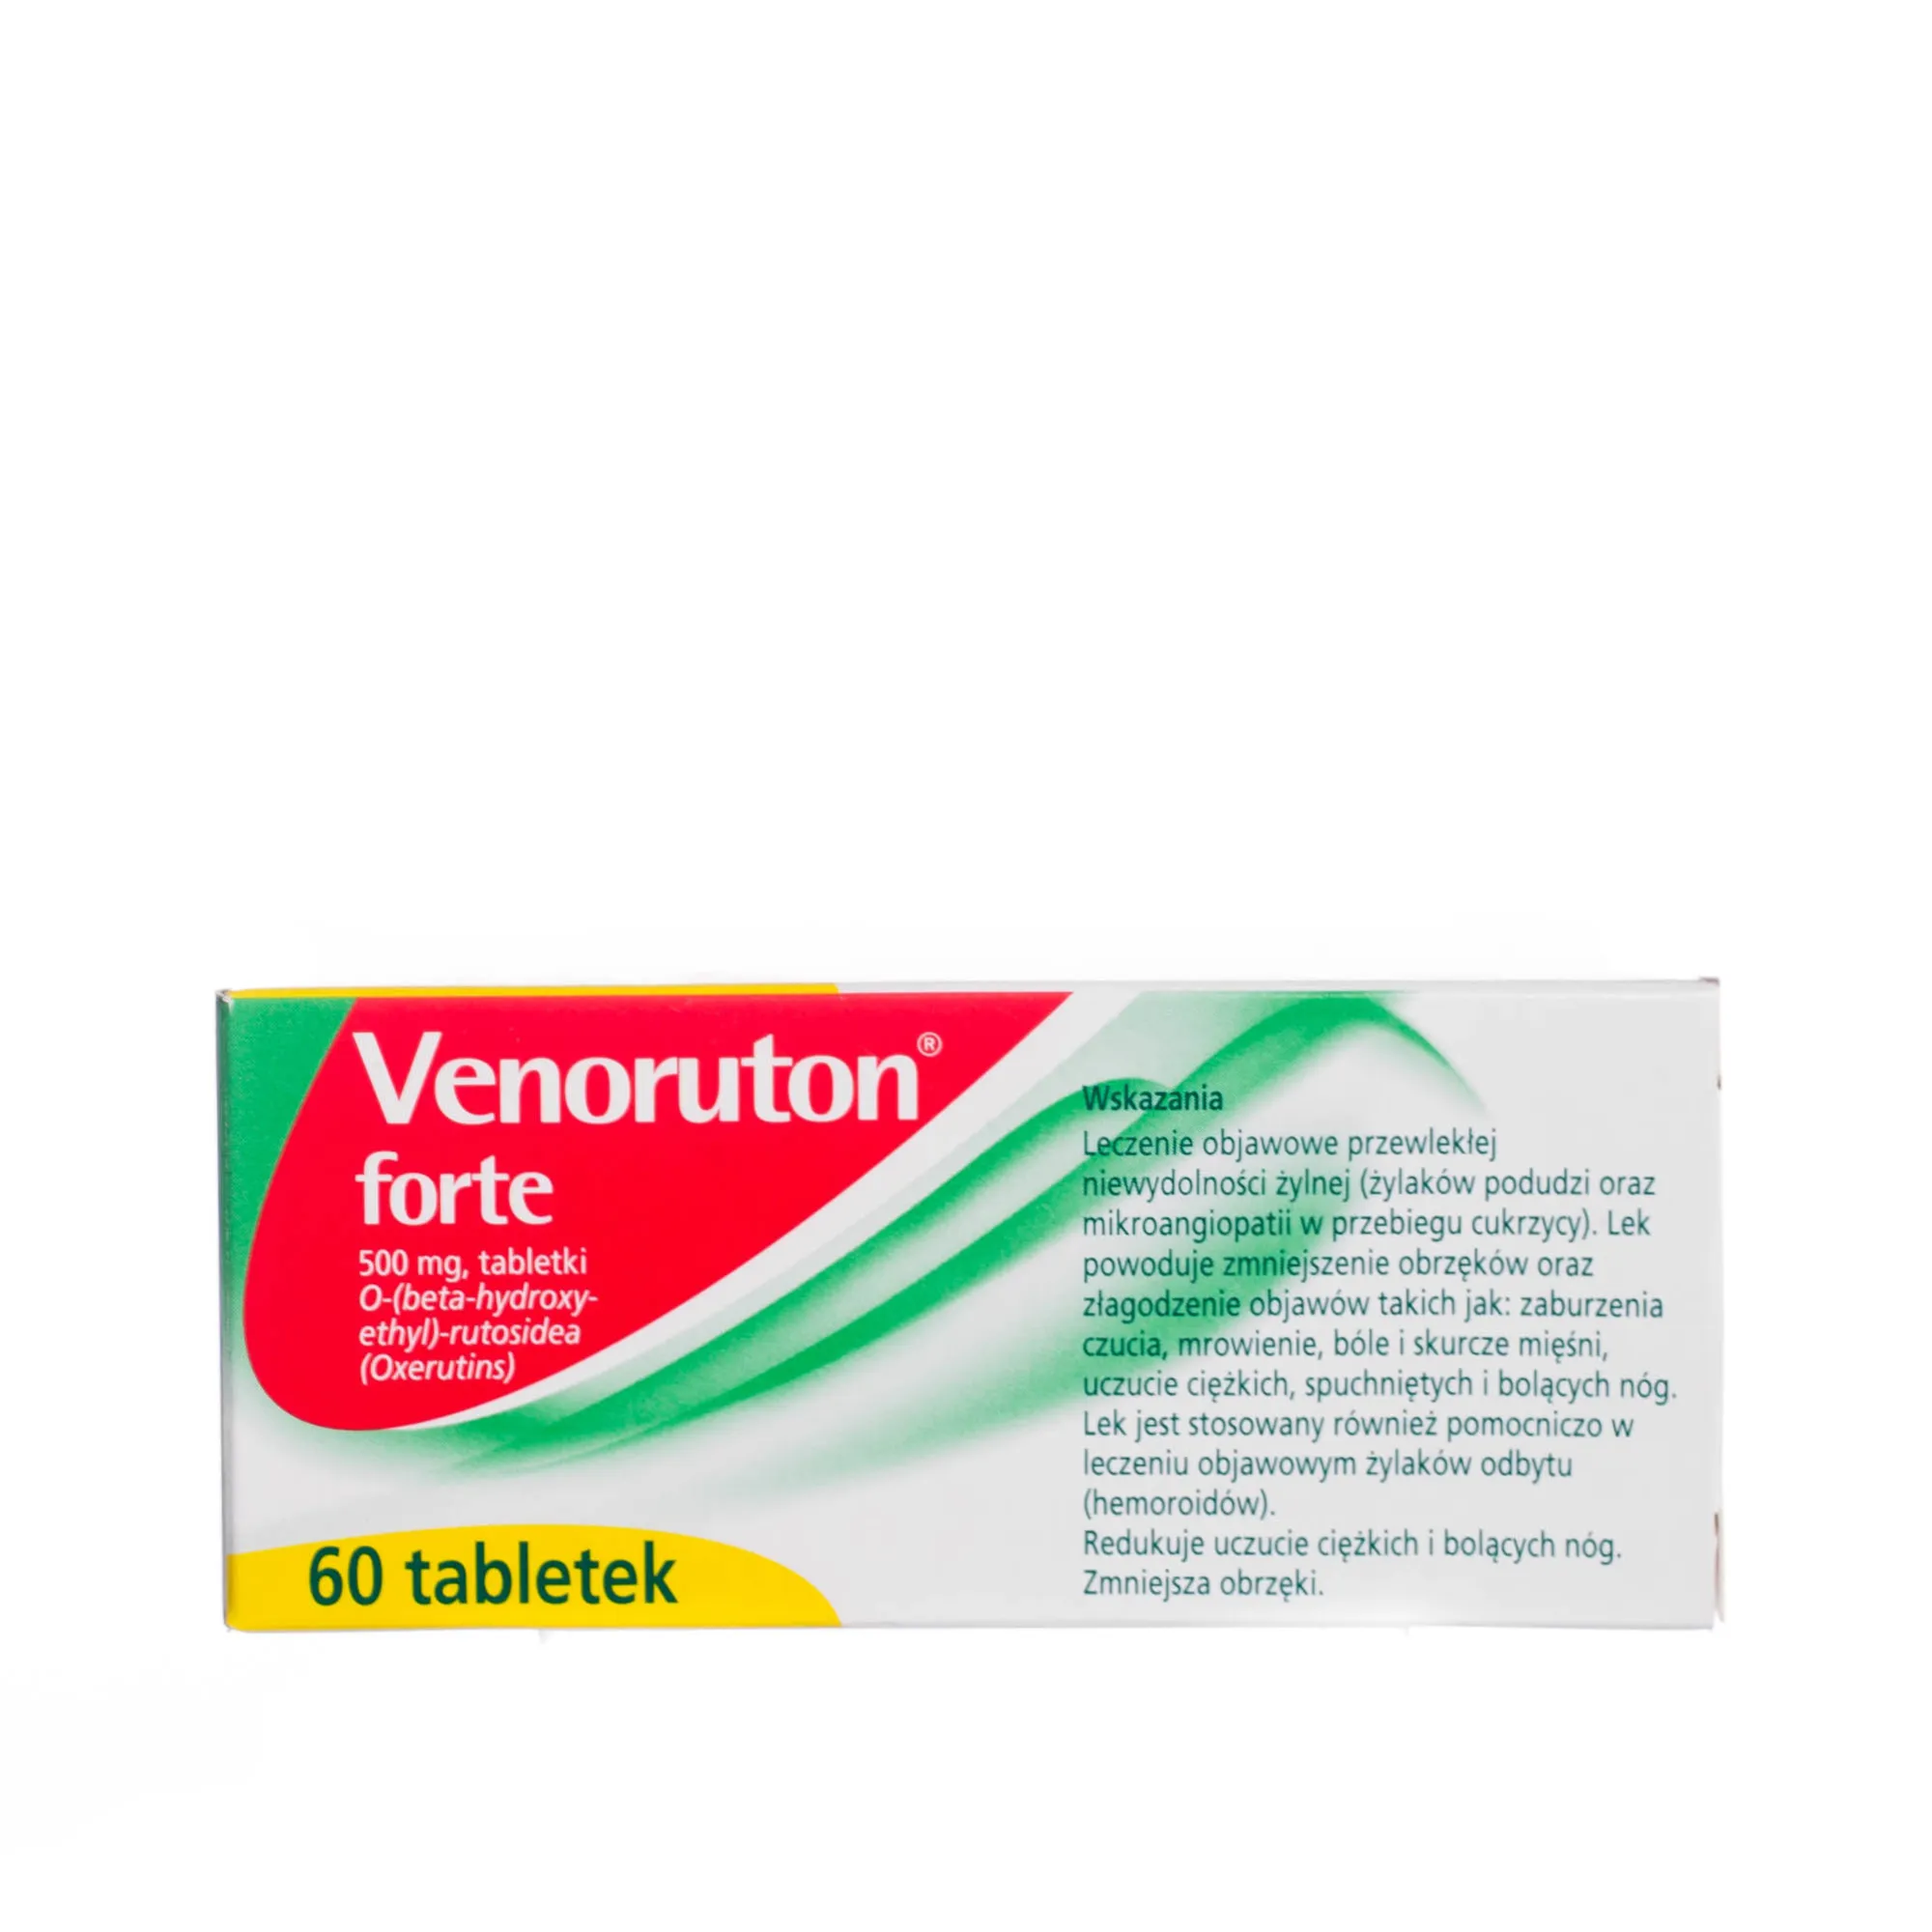 Venoruton forte 500 mg, tabletki O-( beta-hydroxy-ethyl)-rutosidea(Oxerutins), 60 tabletek 